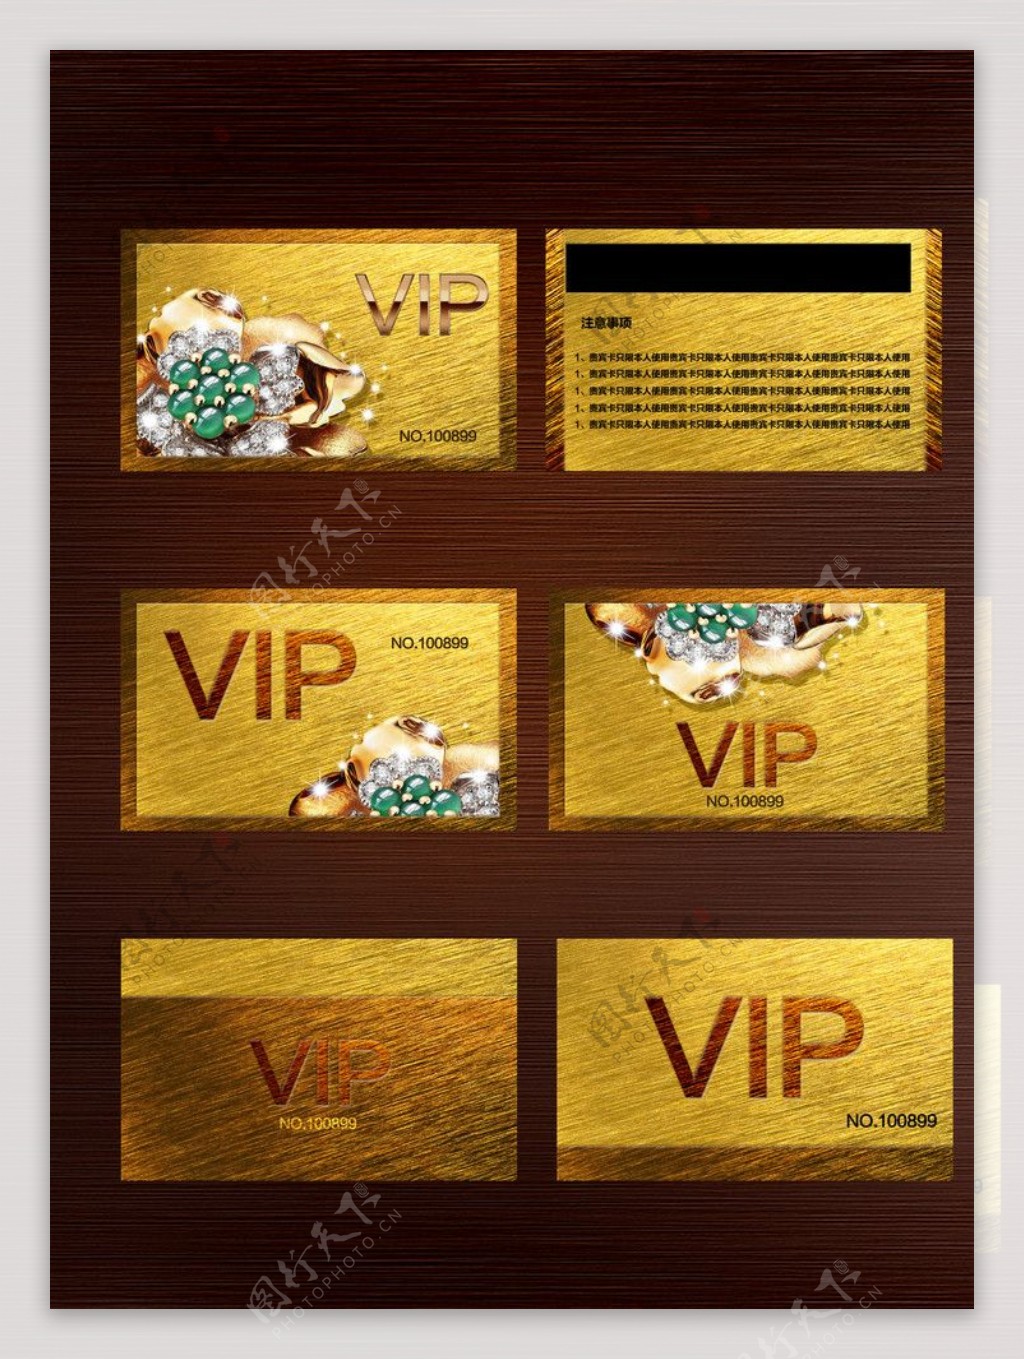 VIP卡贵宾卡会员卡图片